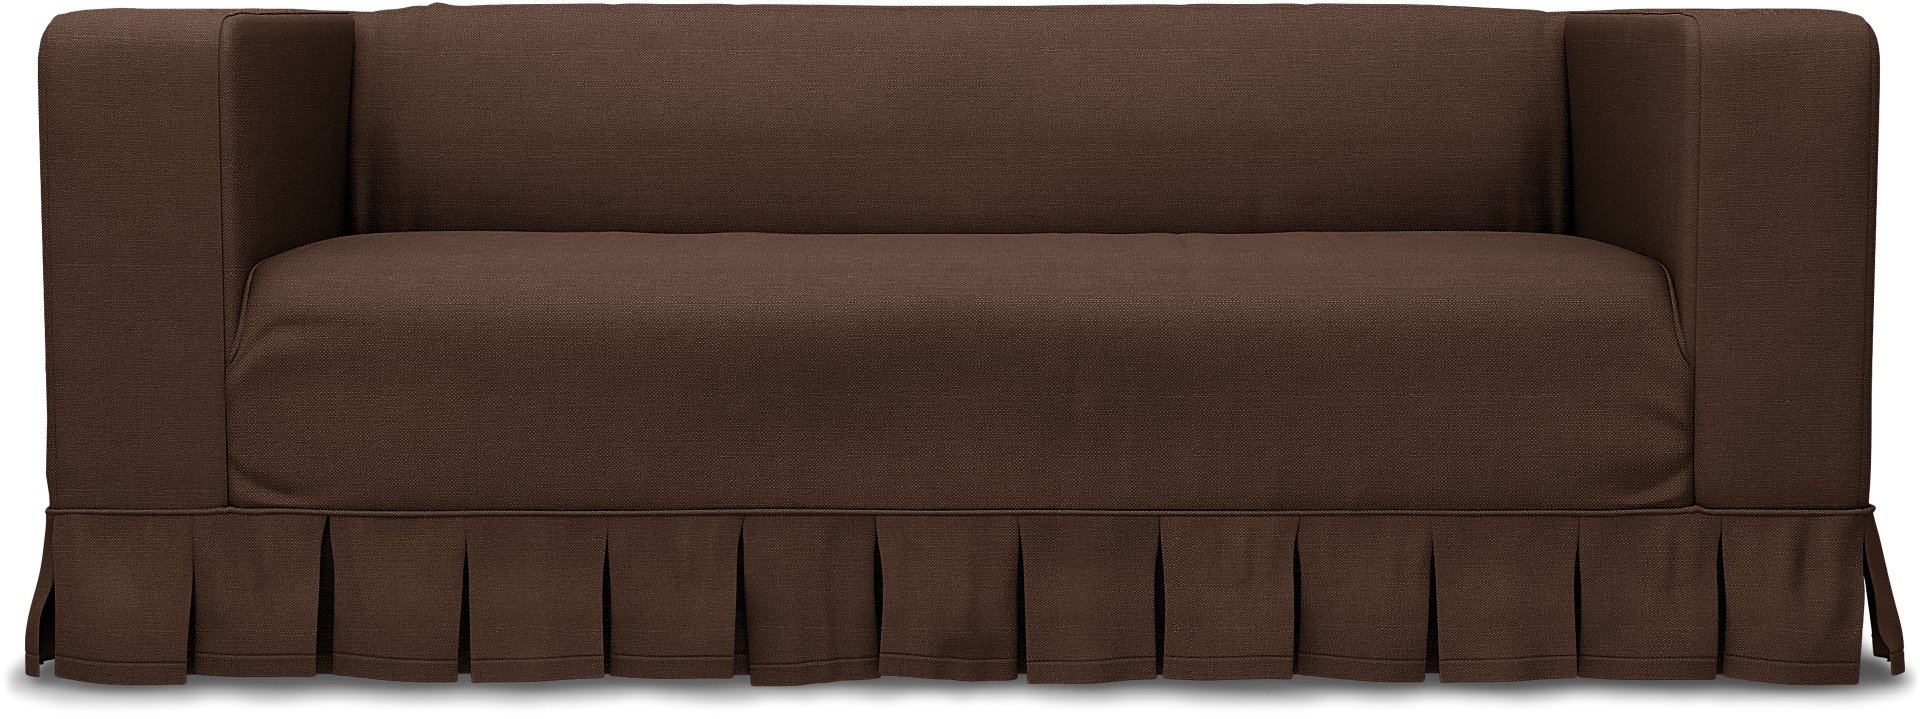 IKEA - Klippan 2 Seater Sofa Cover, Chocolate, Linen - Bemz